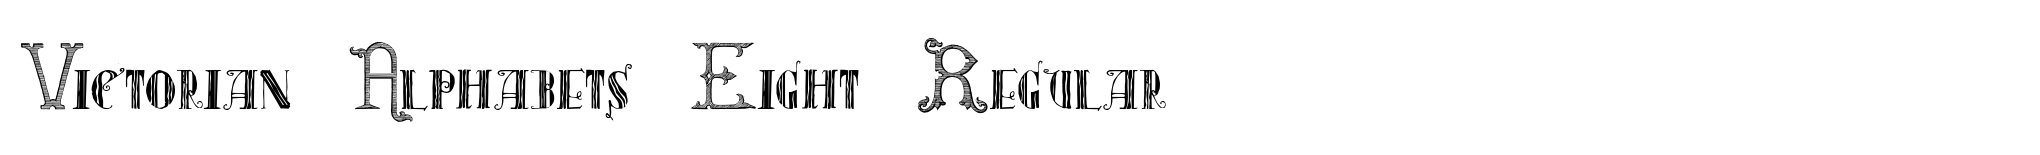 Victorian Alphabets Eight Regular image